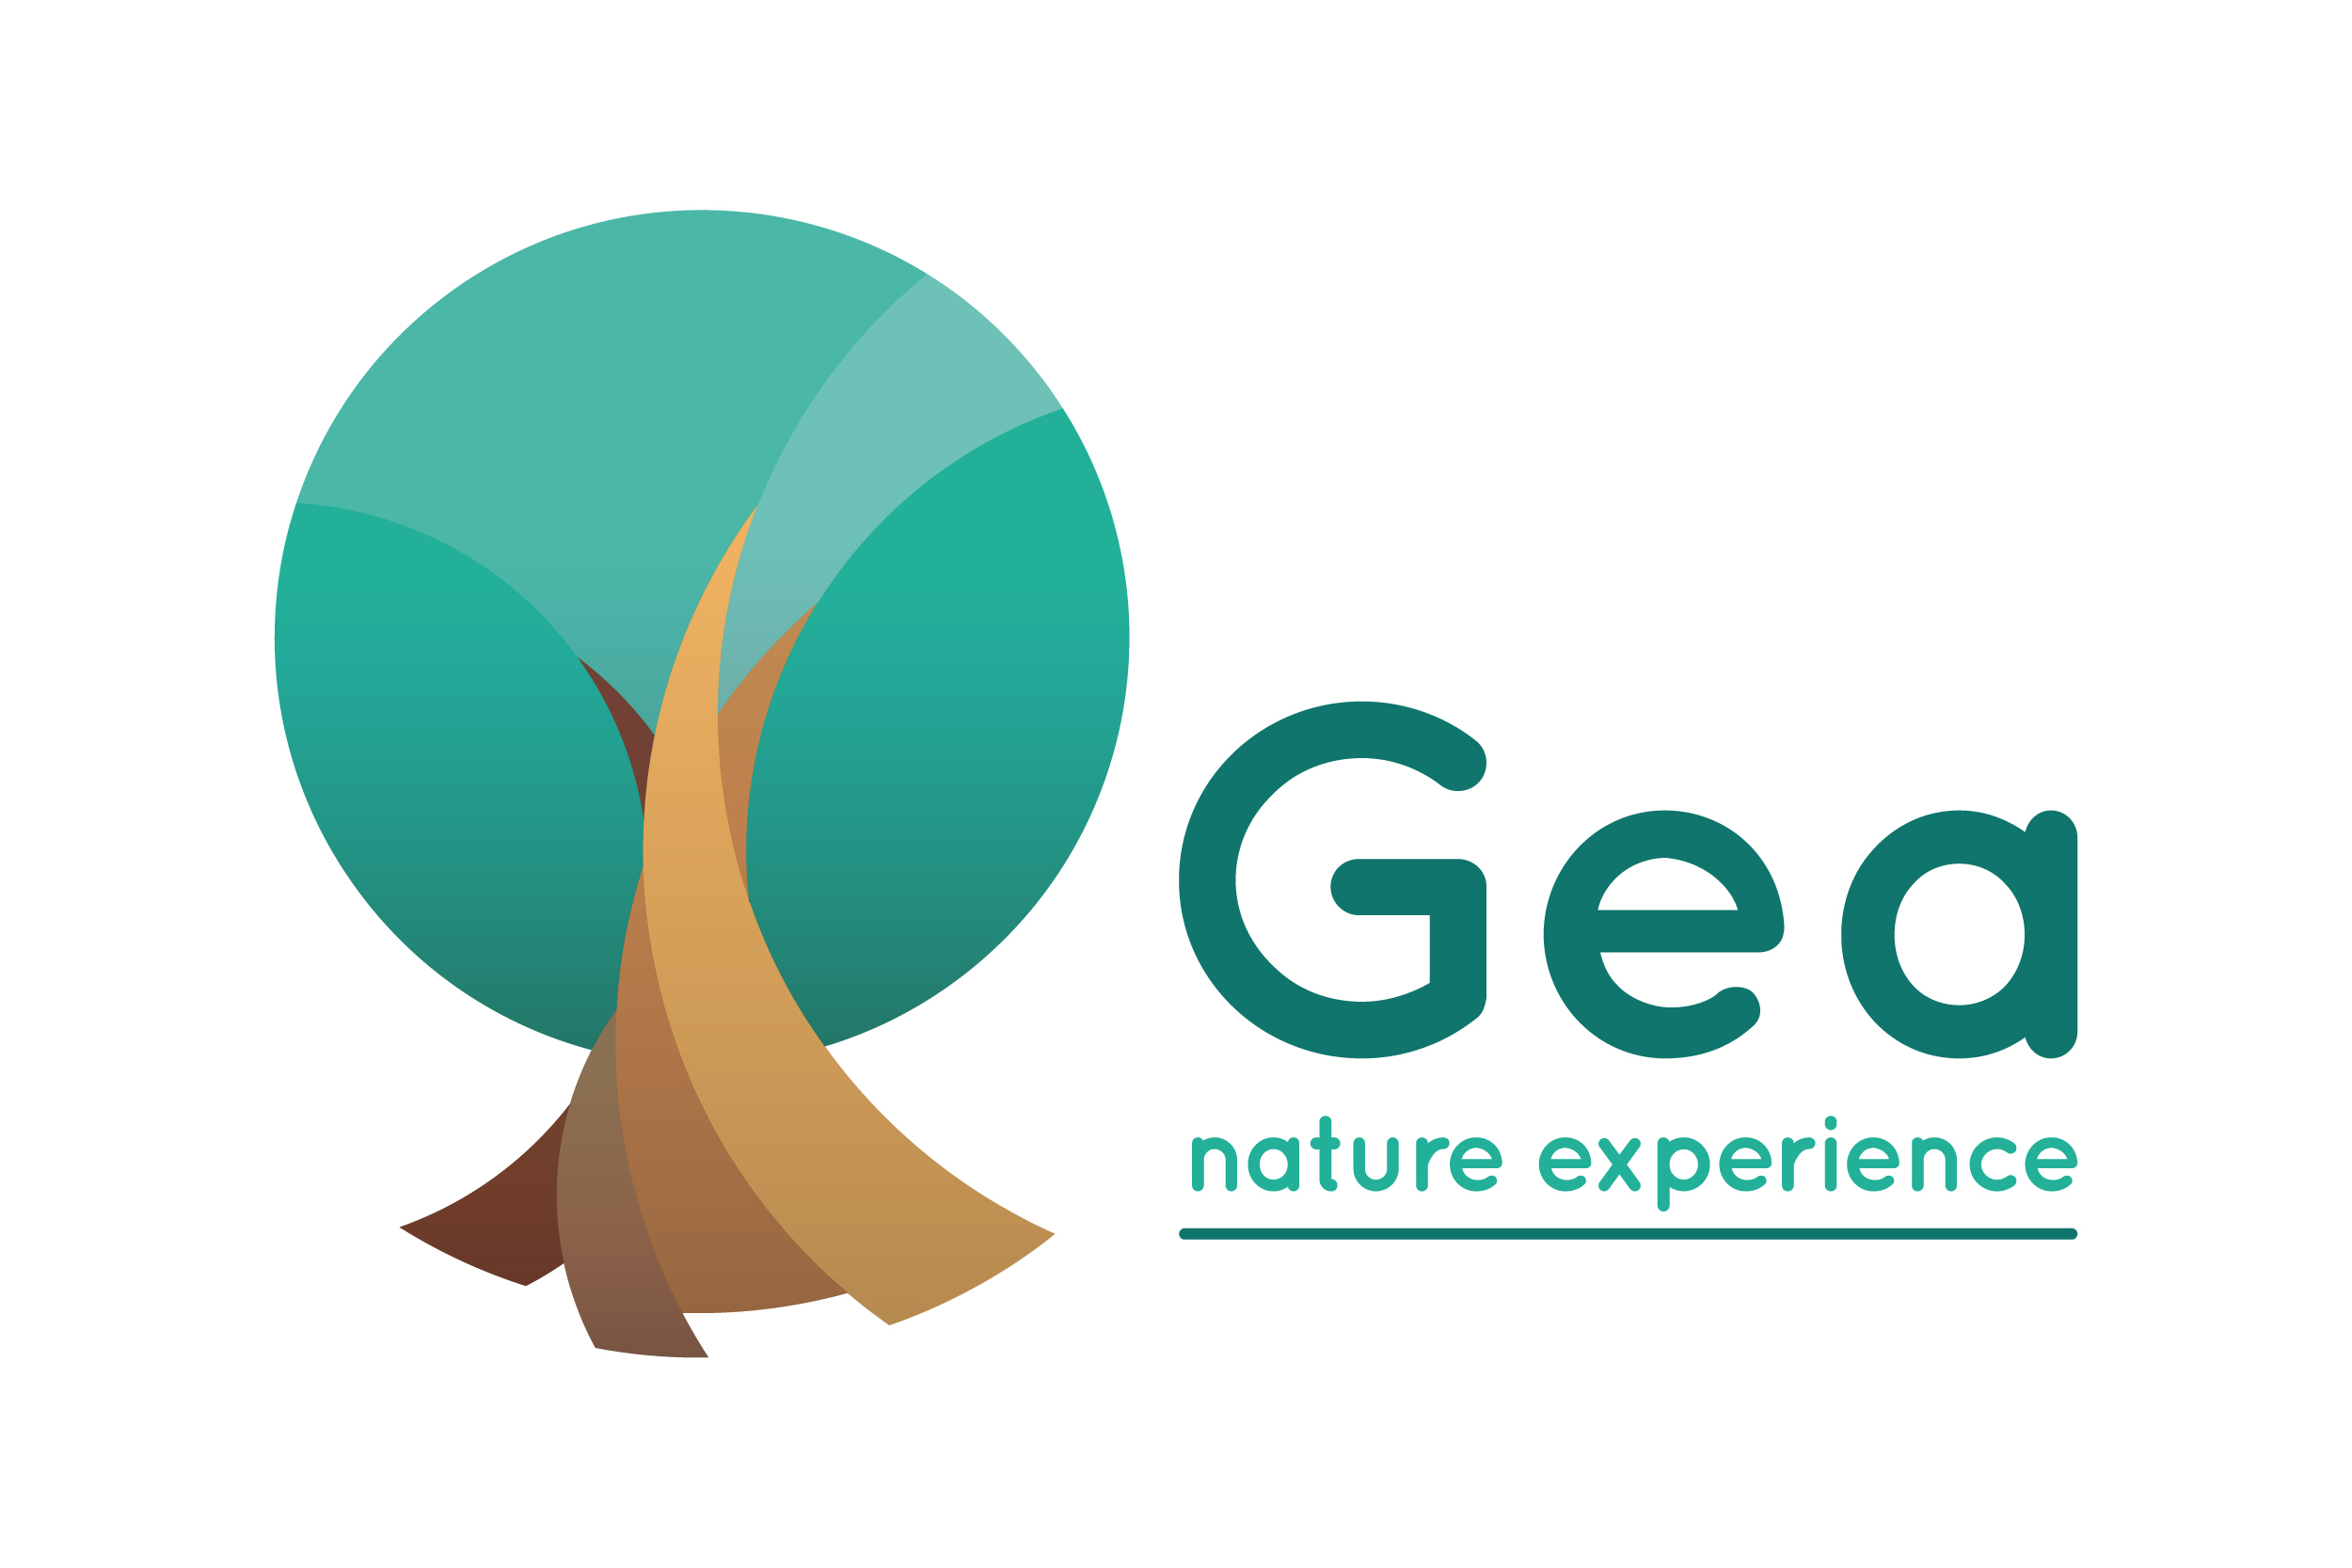 Gea – nature experience